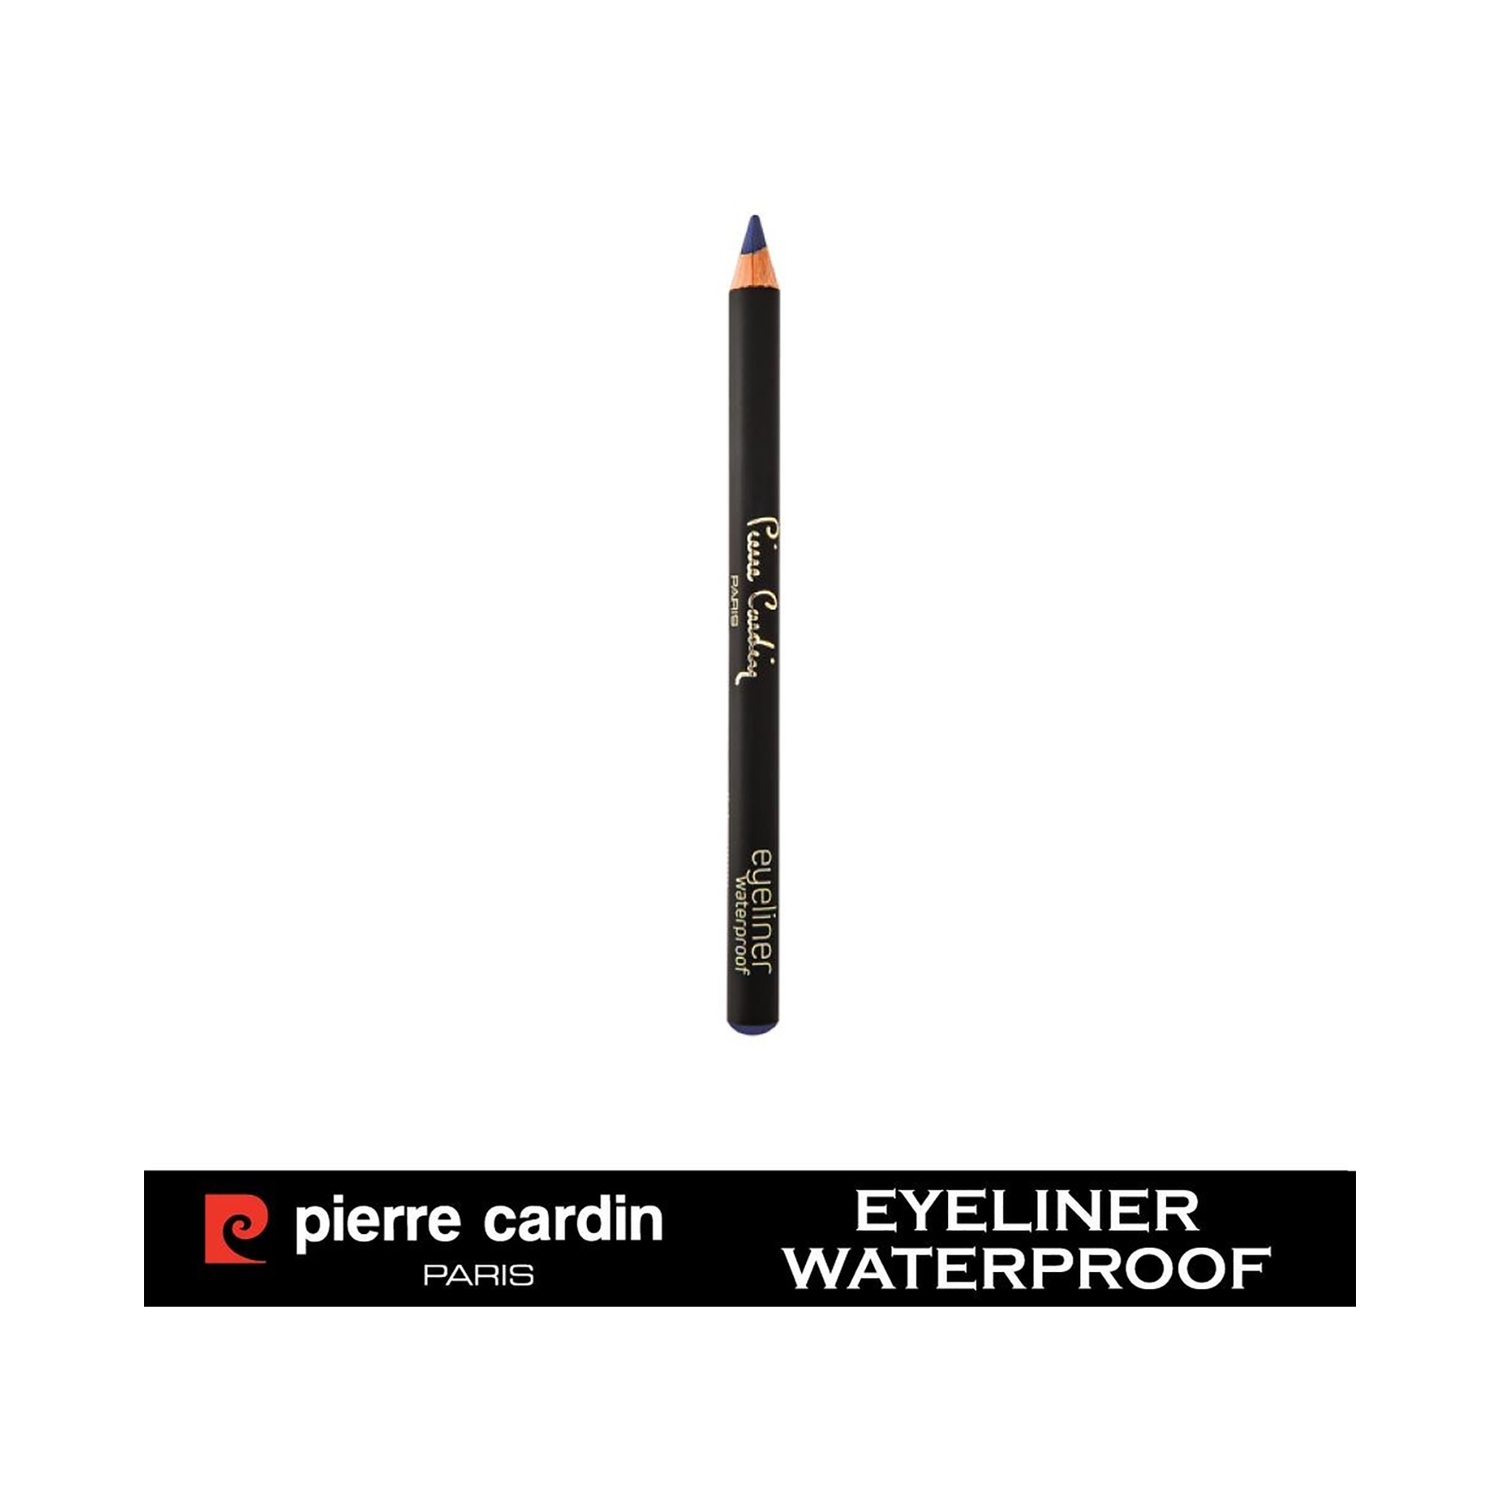 Pierre Cardin Paris | Pierre Cardin Paris Waterproof Eyeliner Pencil - 250 Midnight Blue (0.04g)